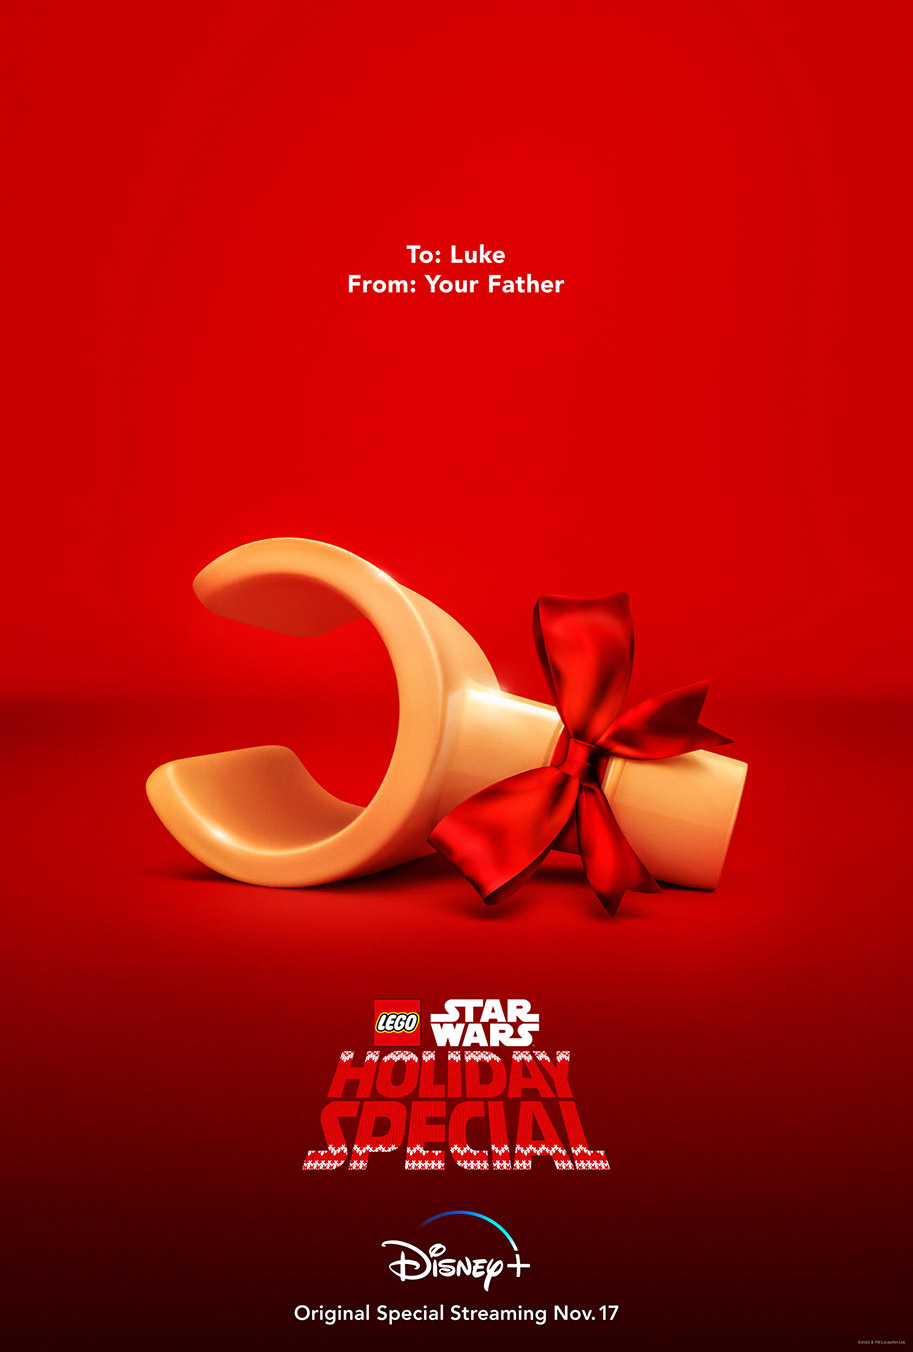 LEGO Star Wars Holiday Special, LEDO, Disney, Star Wars